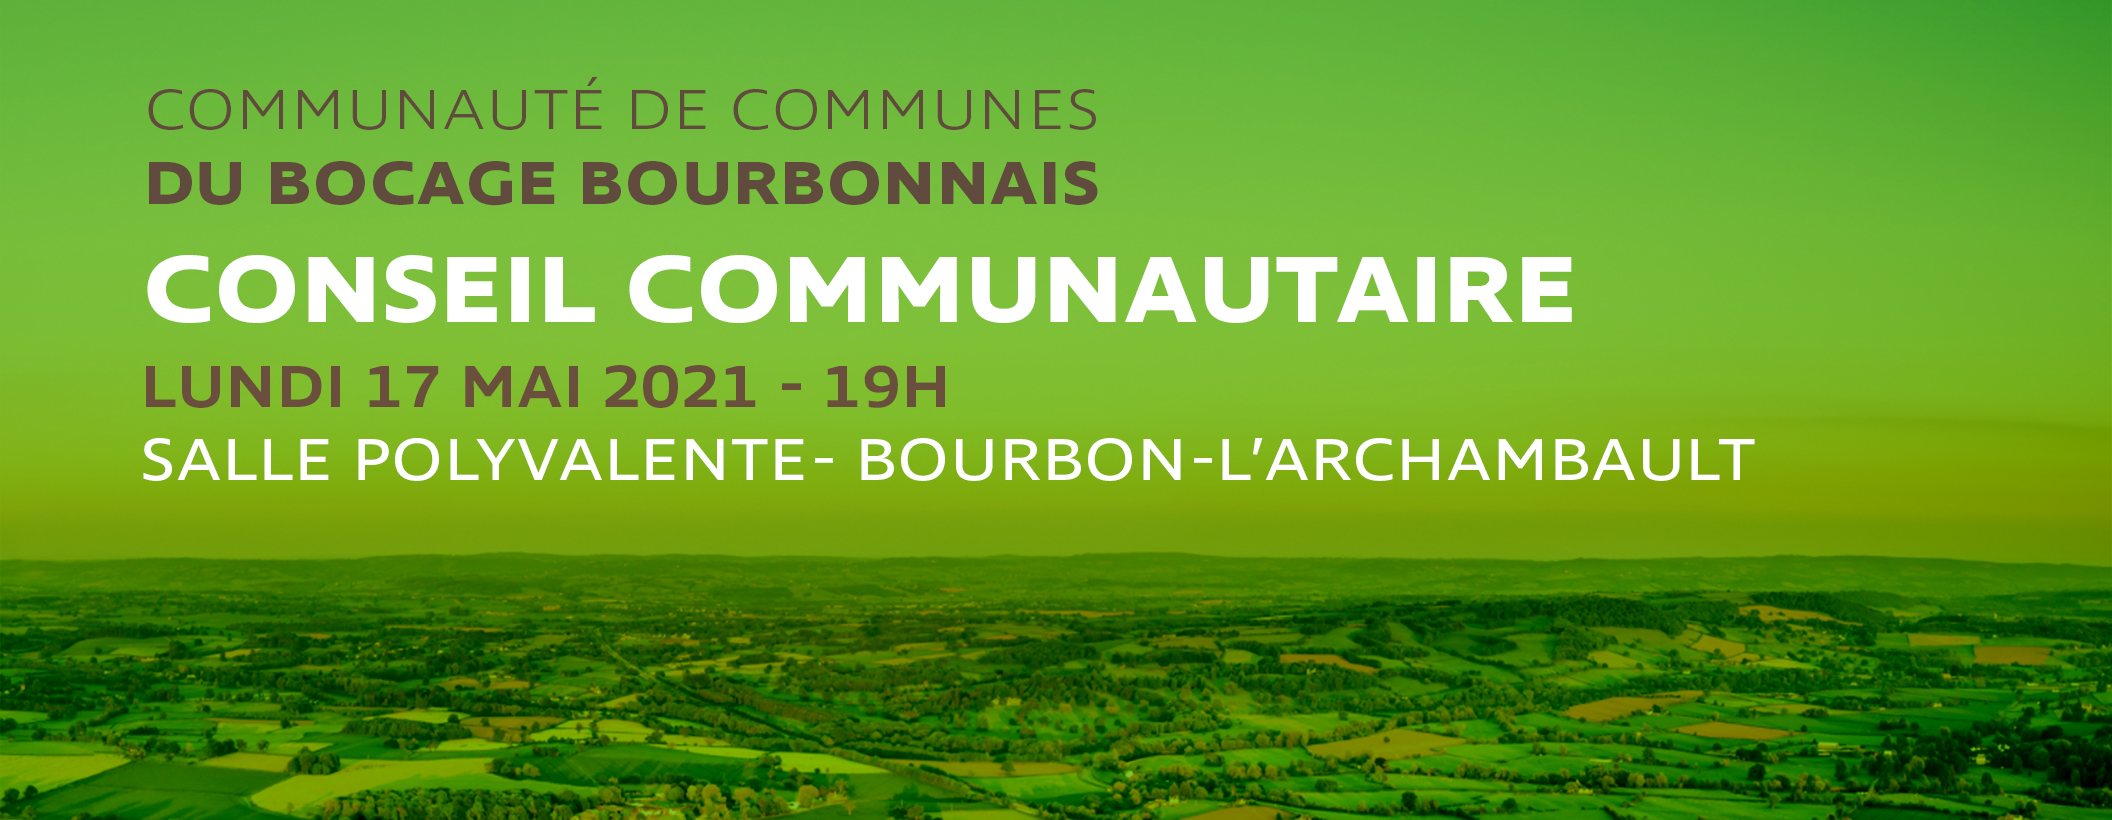 Prochain Conseil Communautaire : lundi 17 mai à Bourbon-l'Archambault